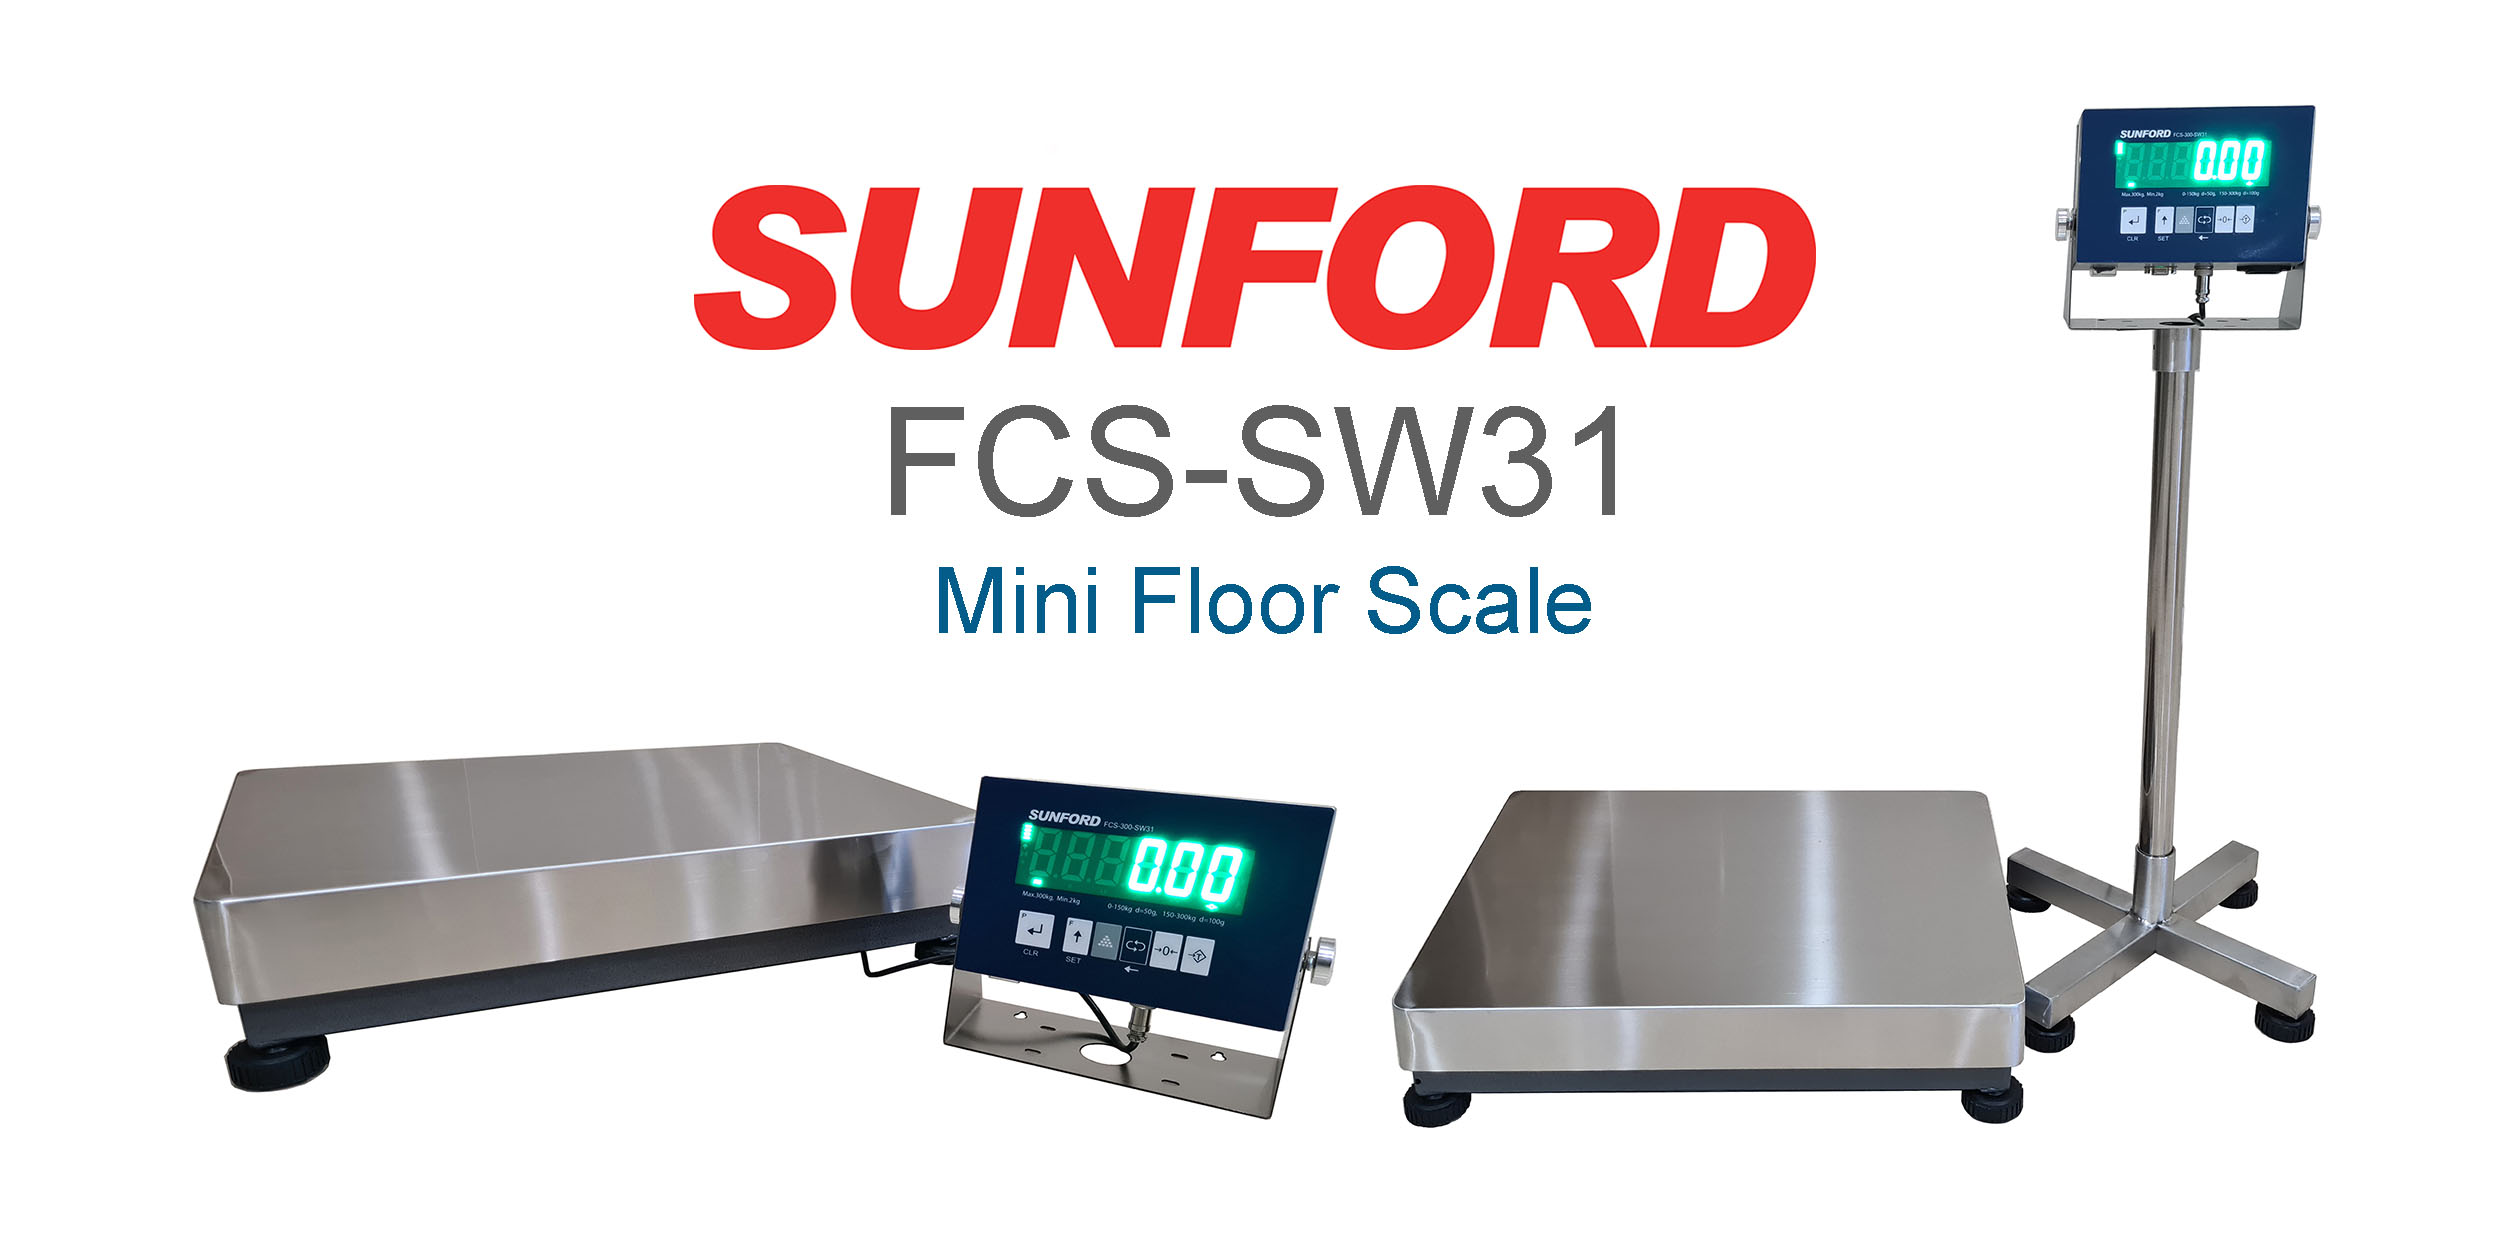 SUNFORD FCS-150-SW31